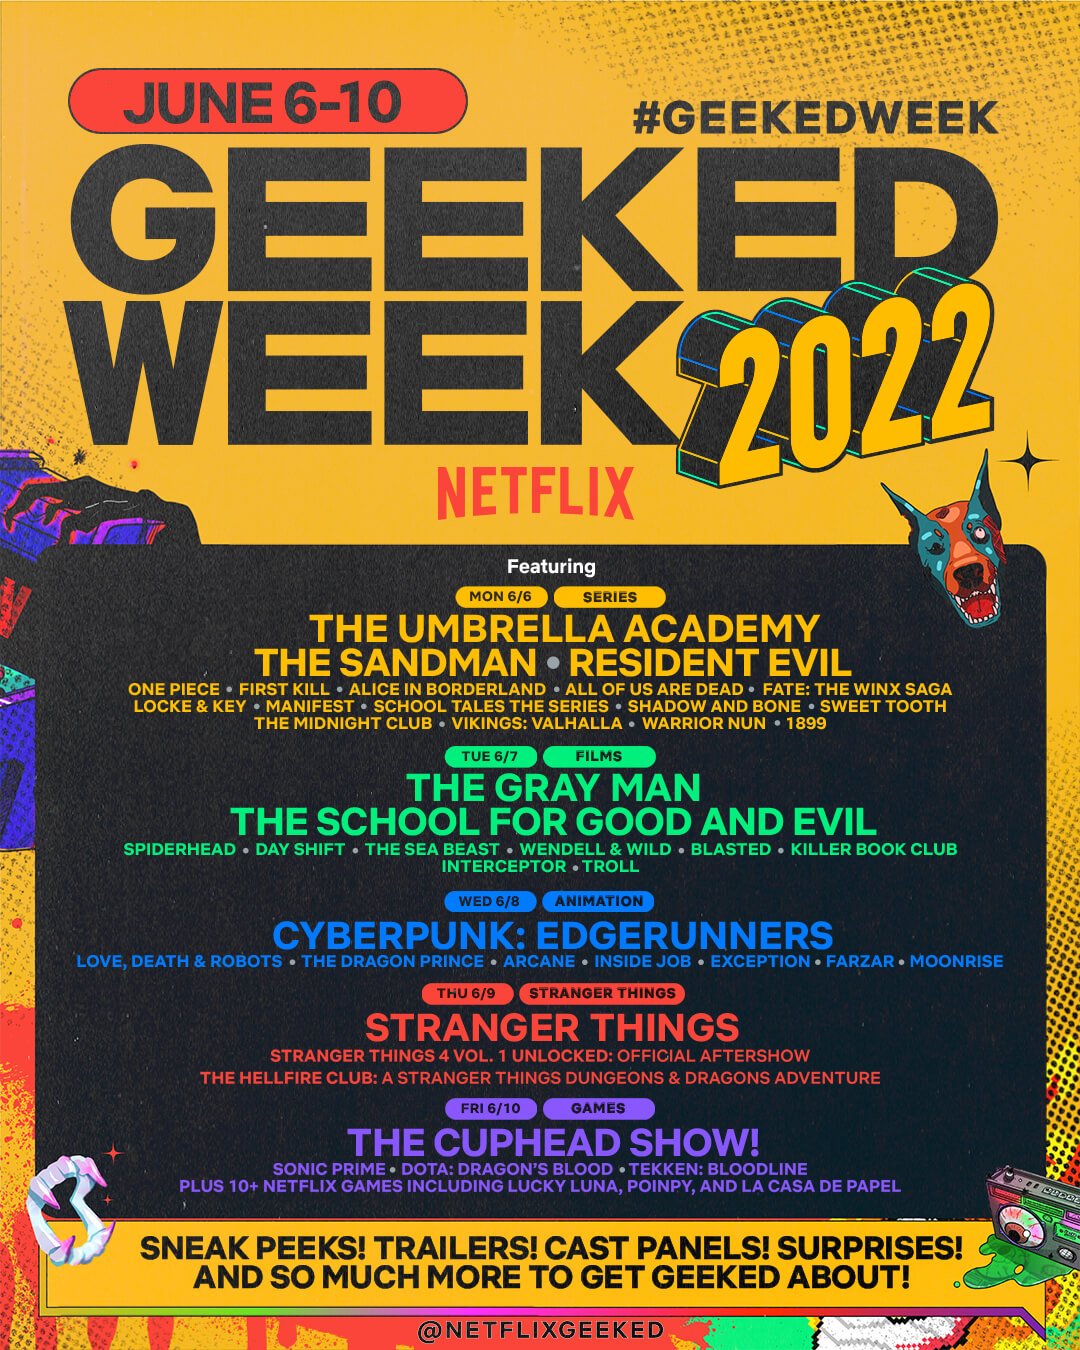 Il programma della Netflix Geeked Week